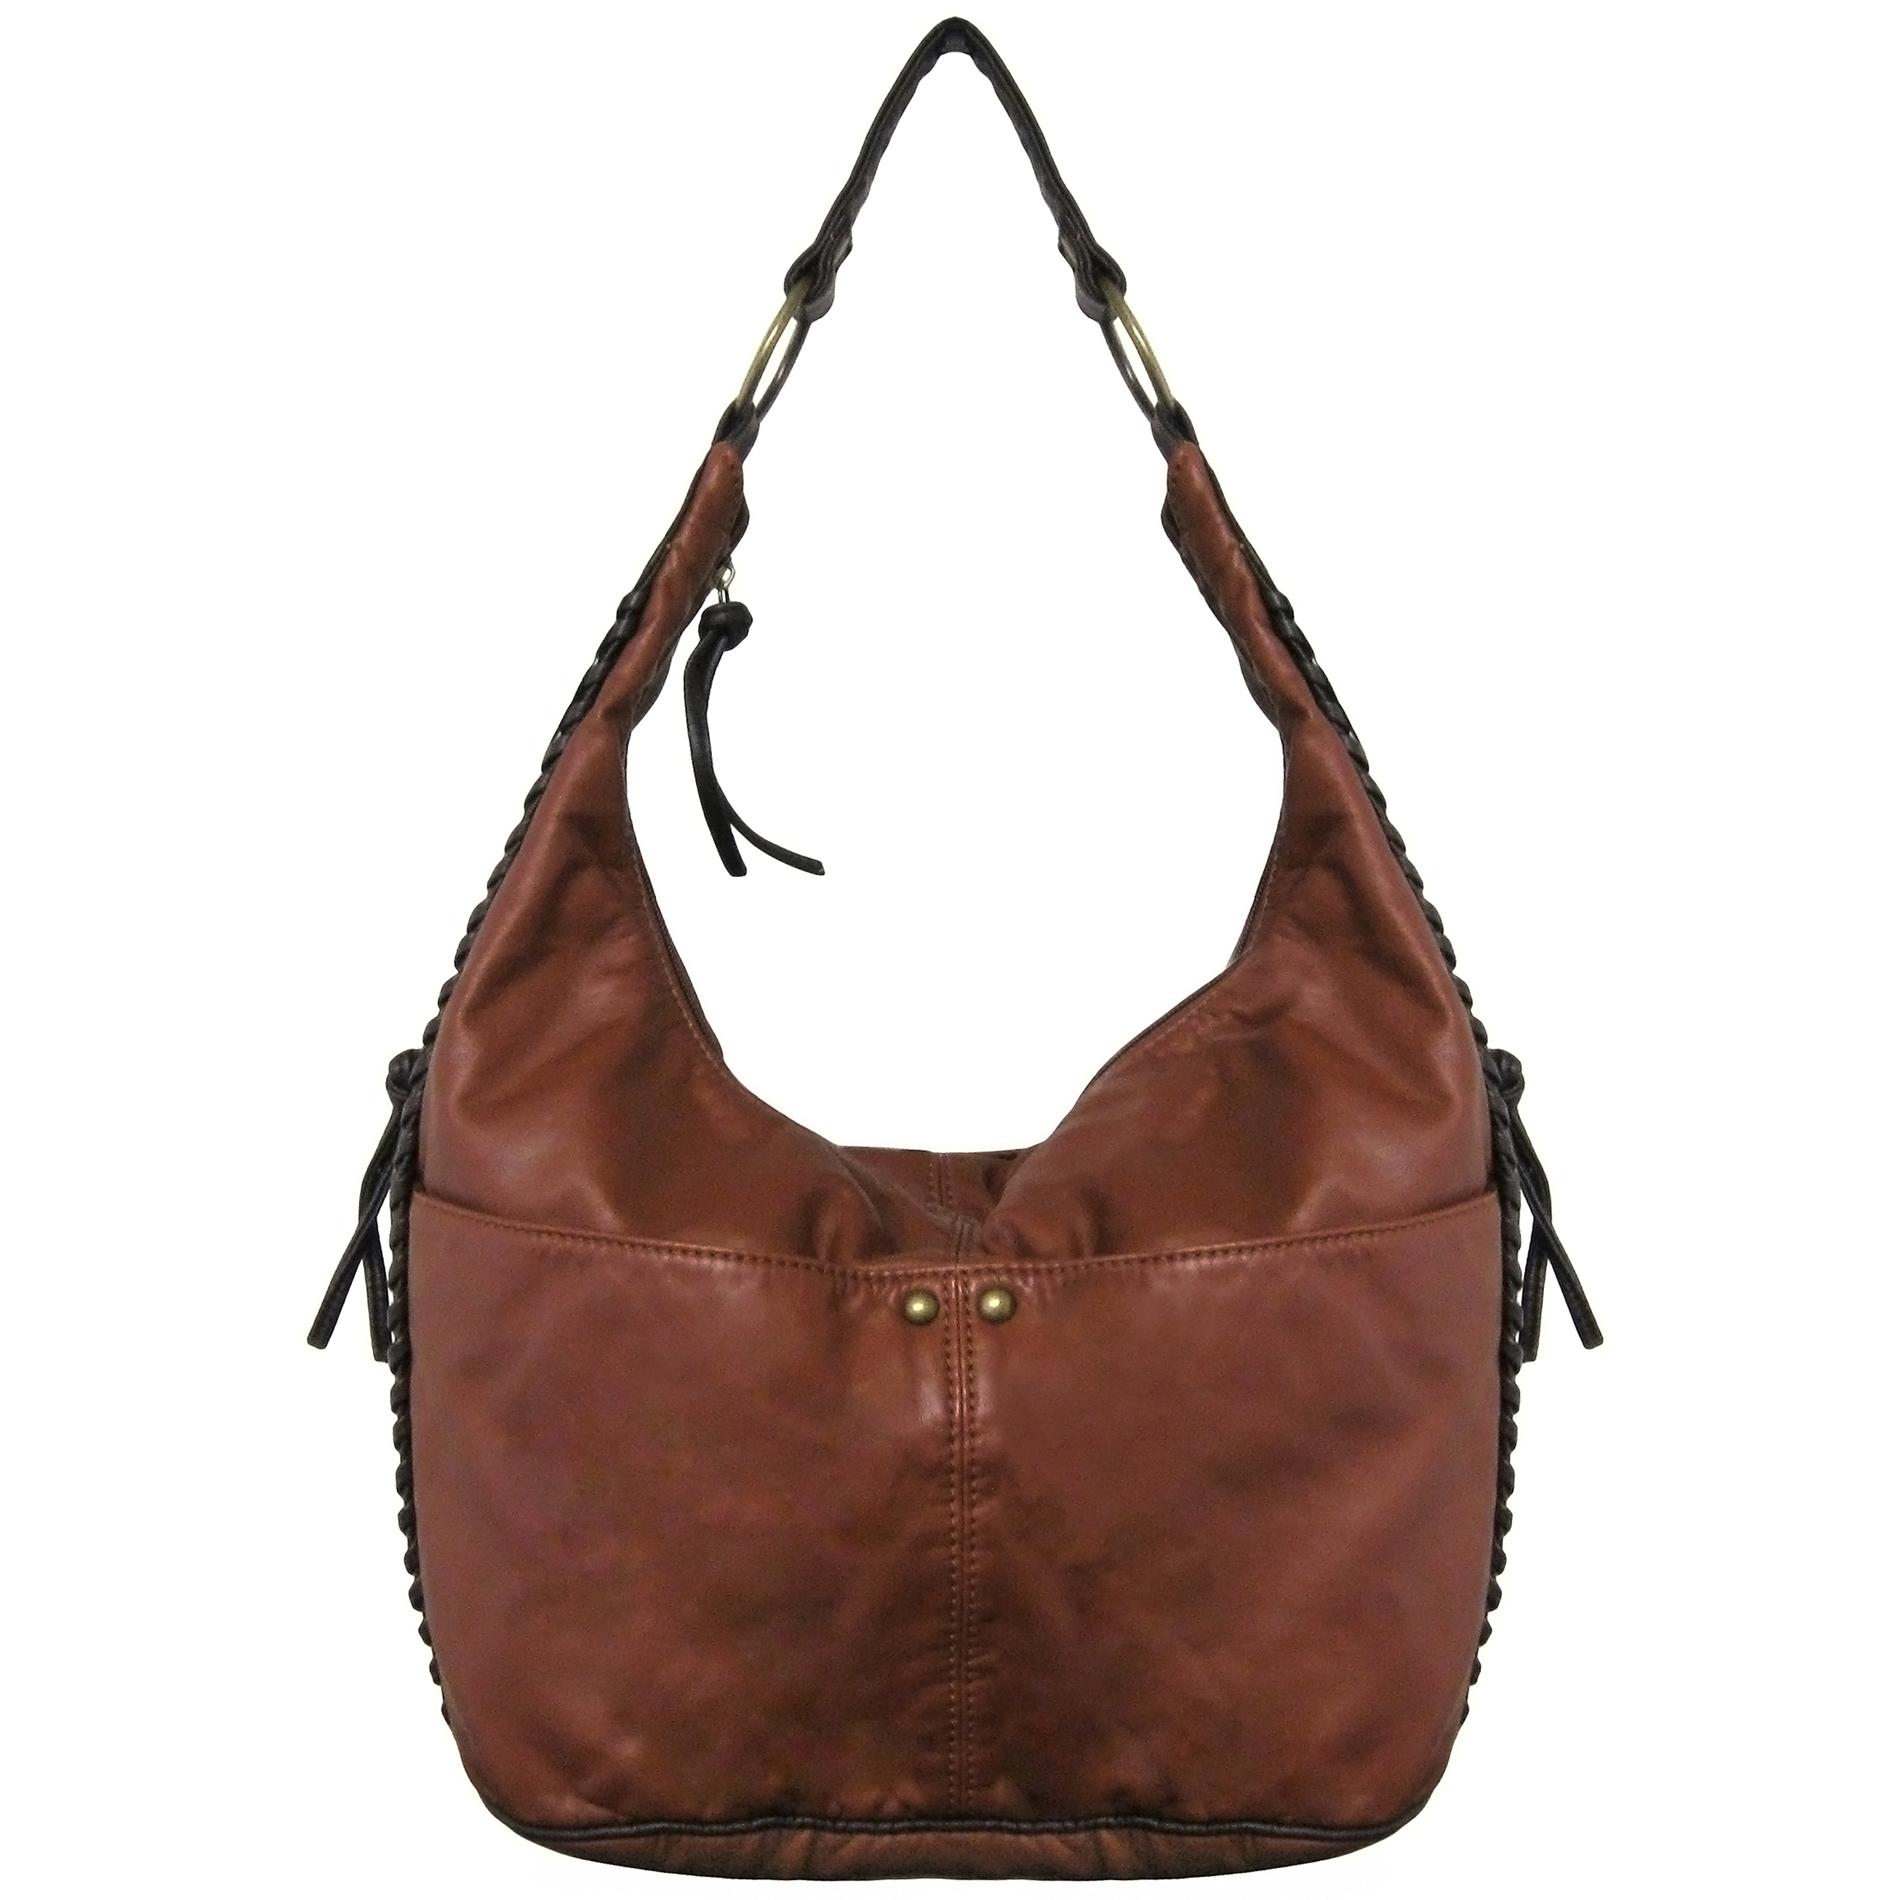 Covington Women's Hobo Handbag